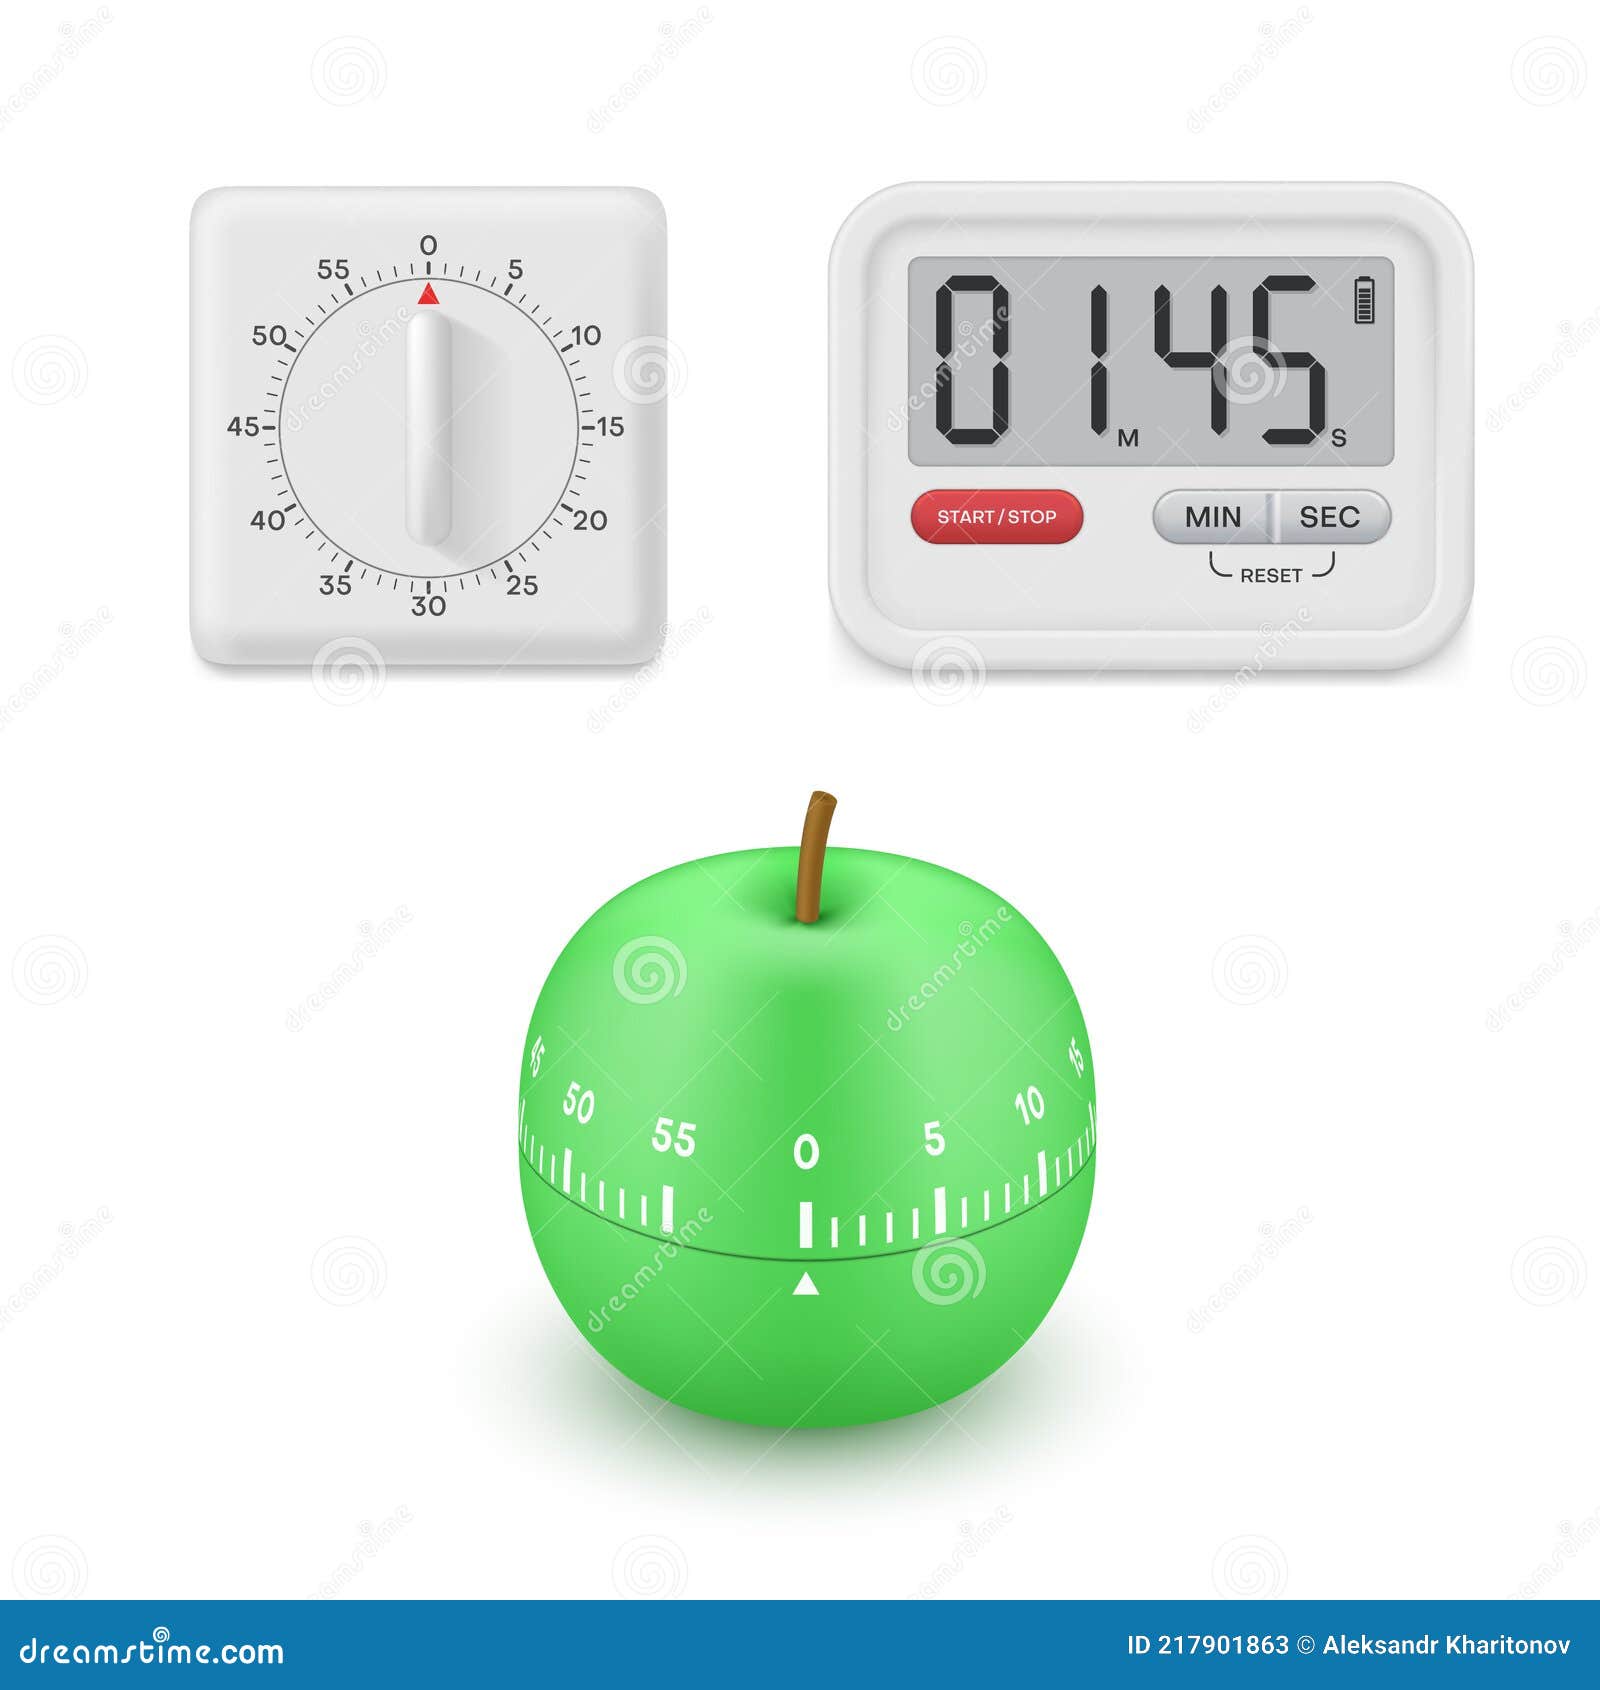 Analogue kitchen timer